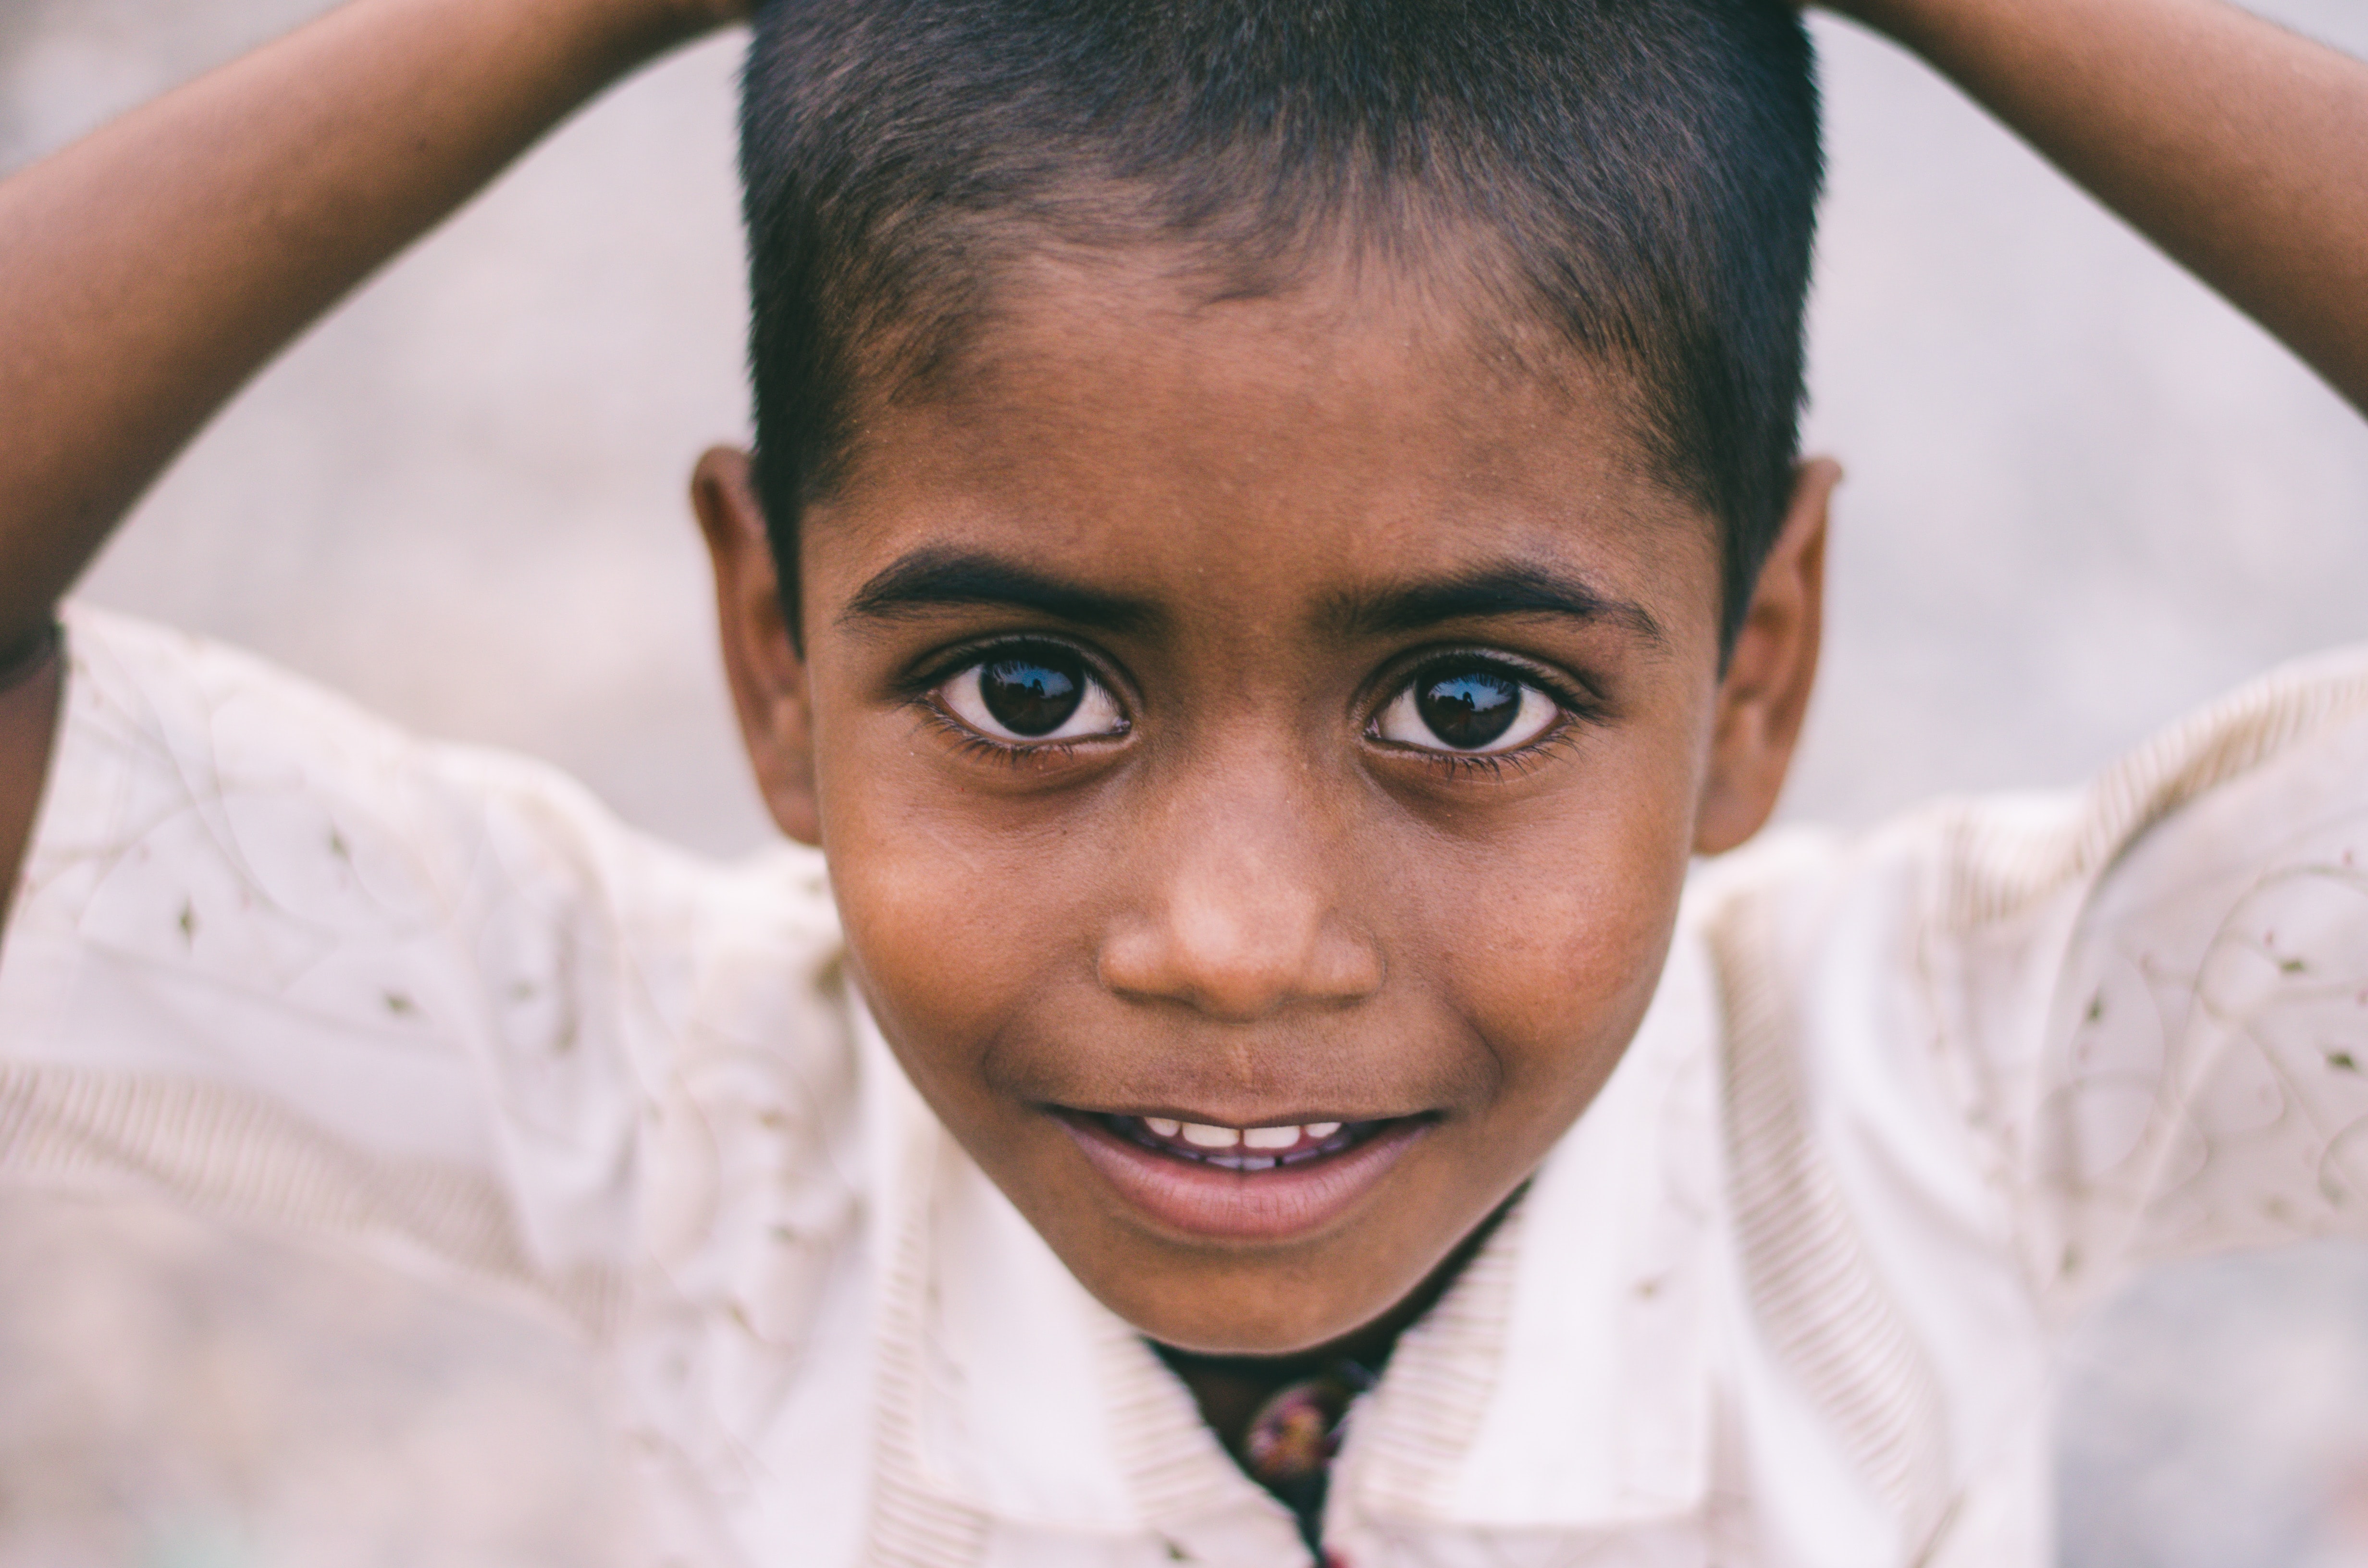 Little Indian boy with hands on head looking into camera; image by Shravan K. Acharya, via Unsplash.com.